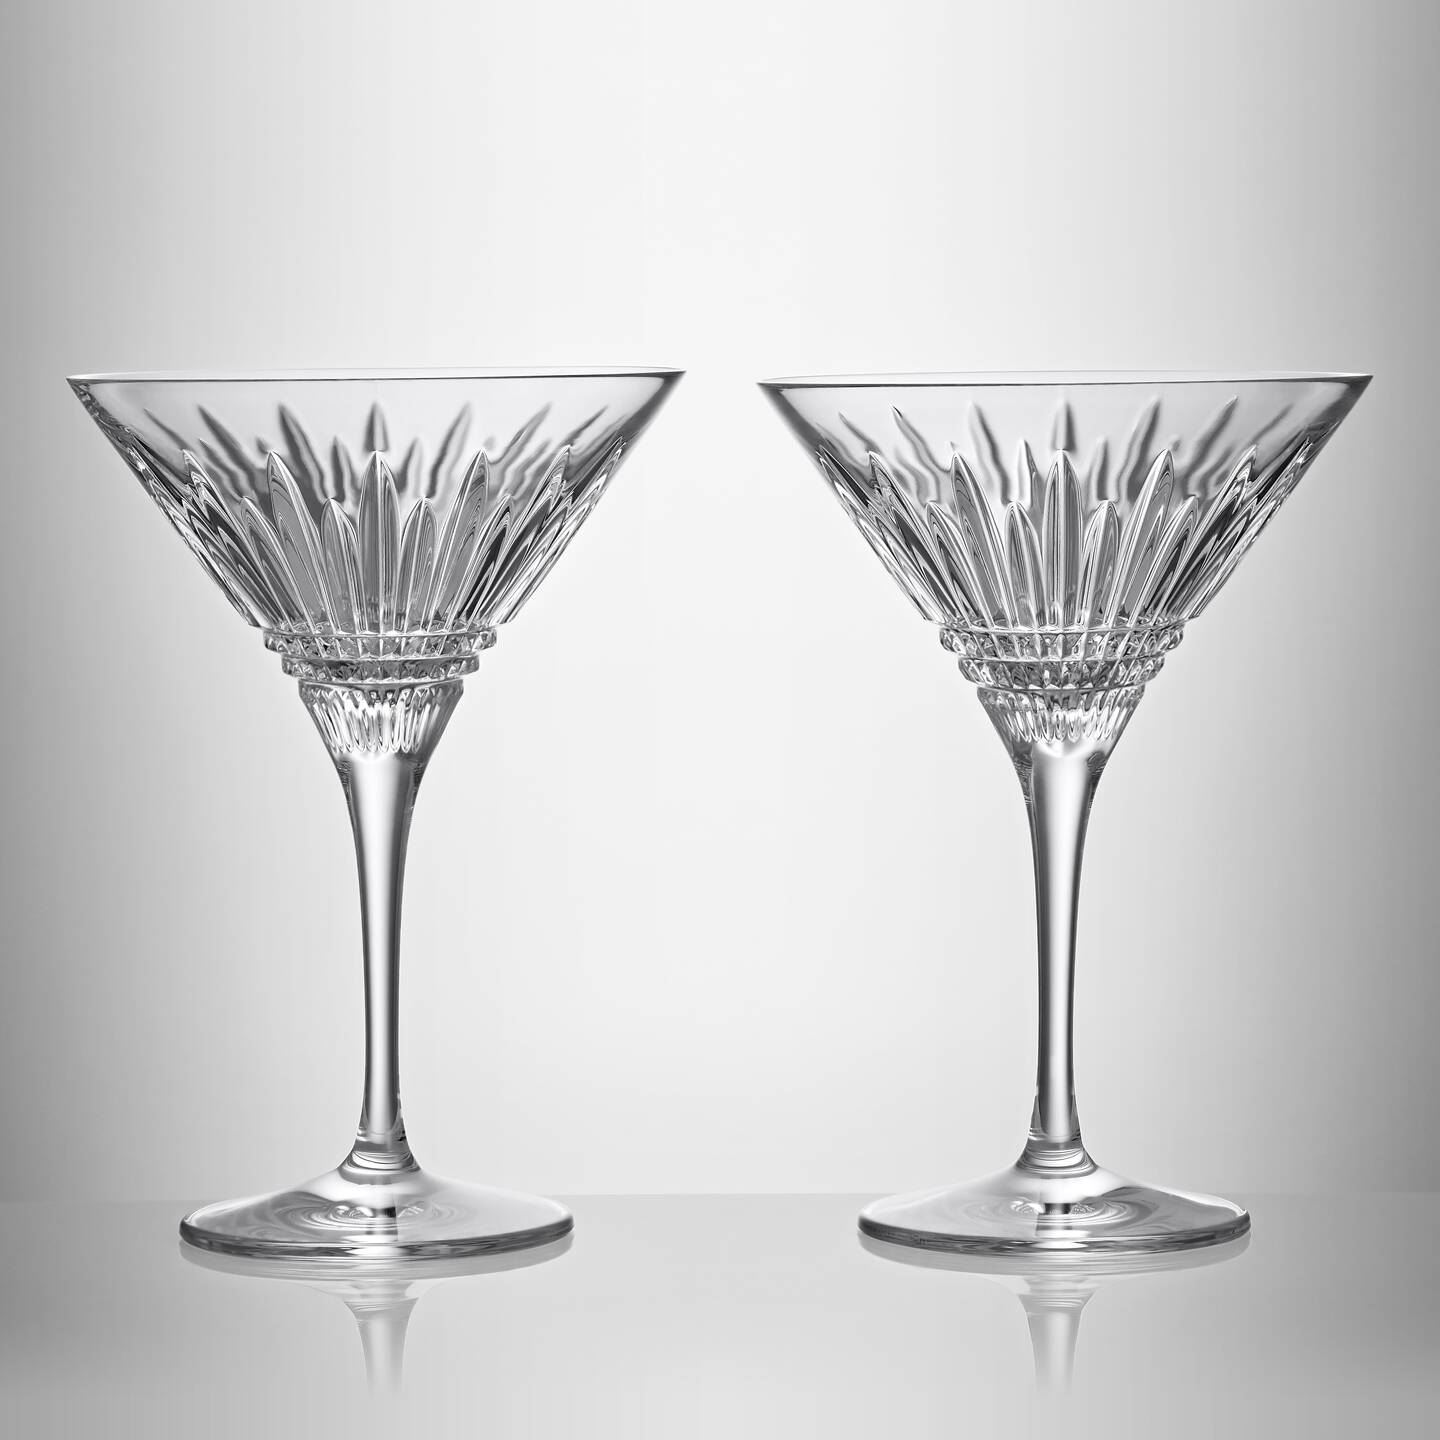 Waterford Lismore Diamond Martini Glasses, Set of 2